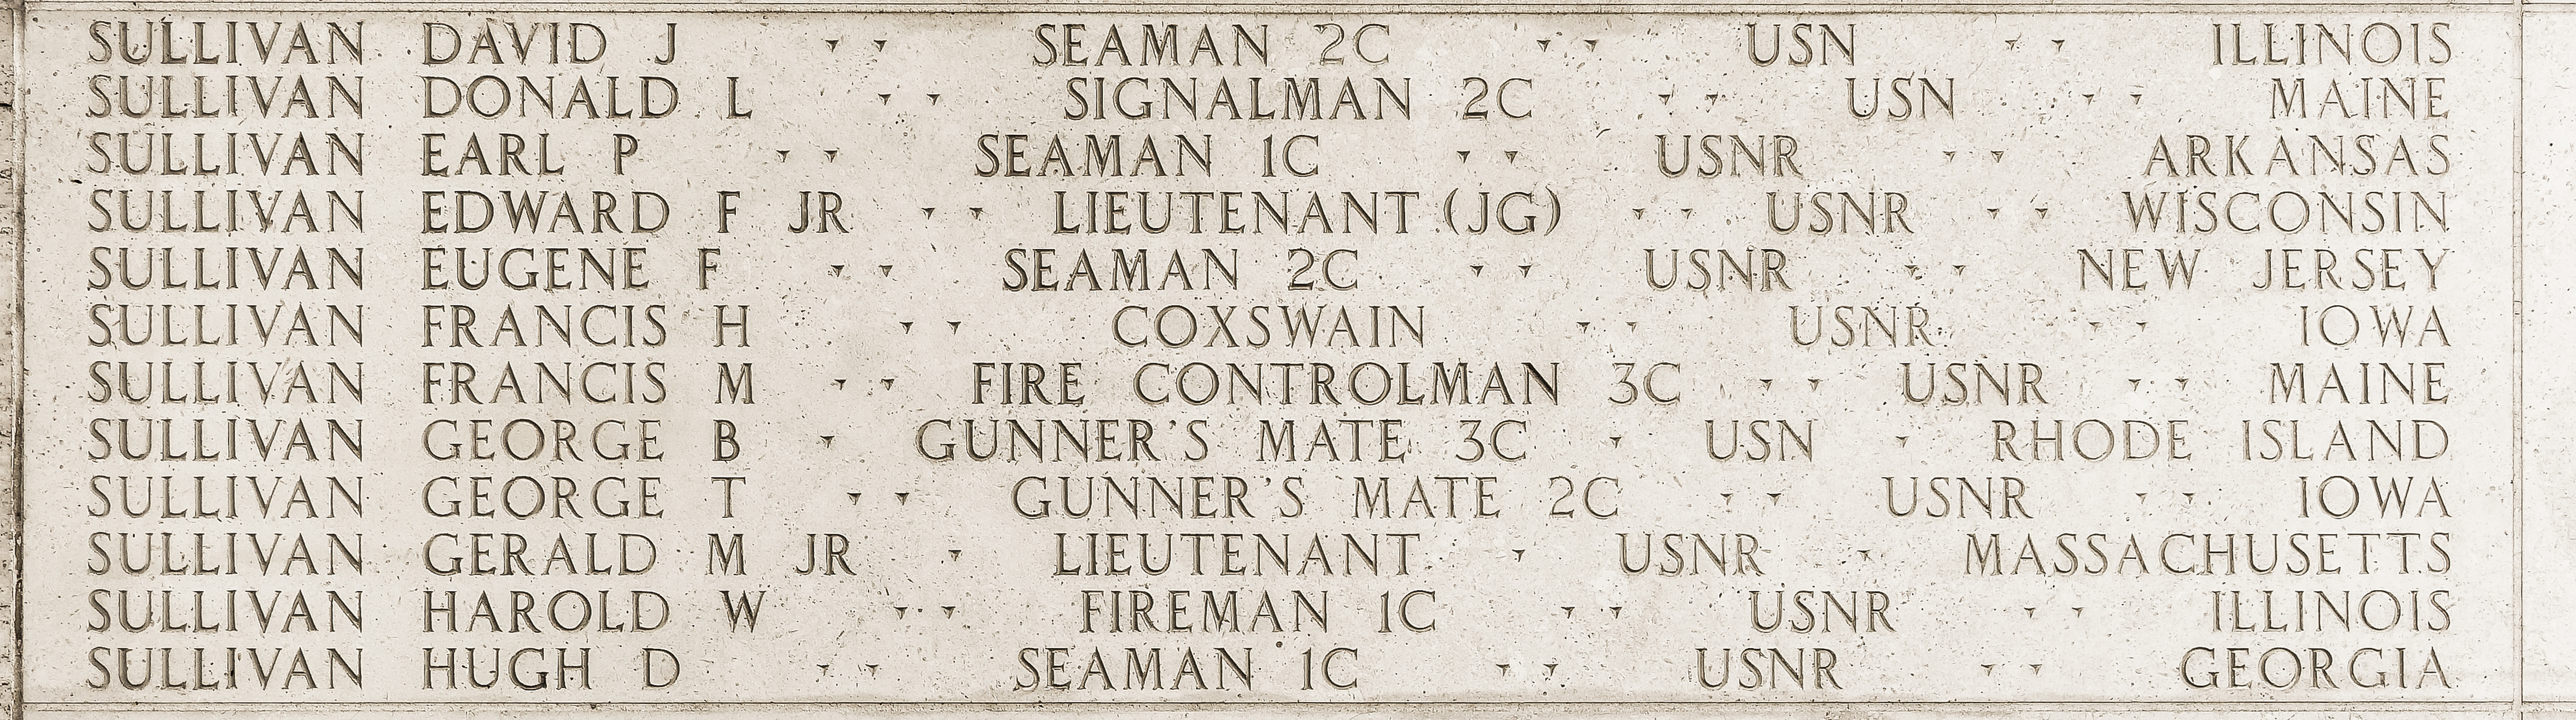 Francis M. Sullivan, Fire Controlman Third Class